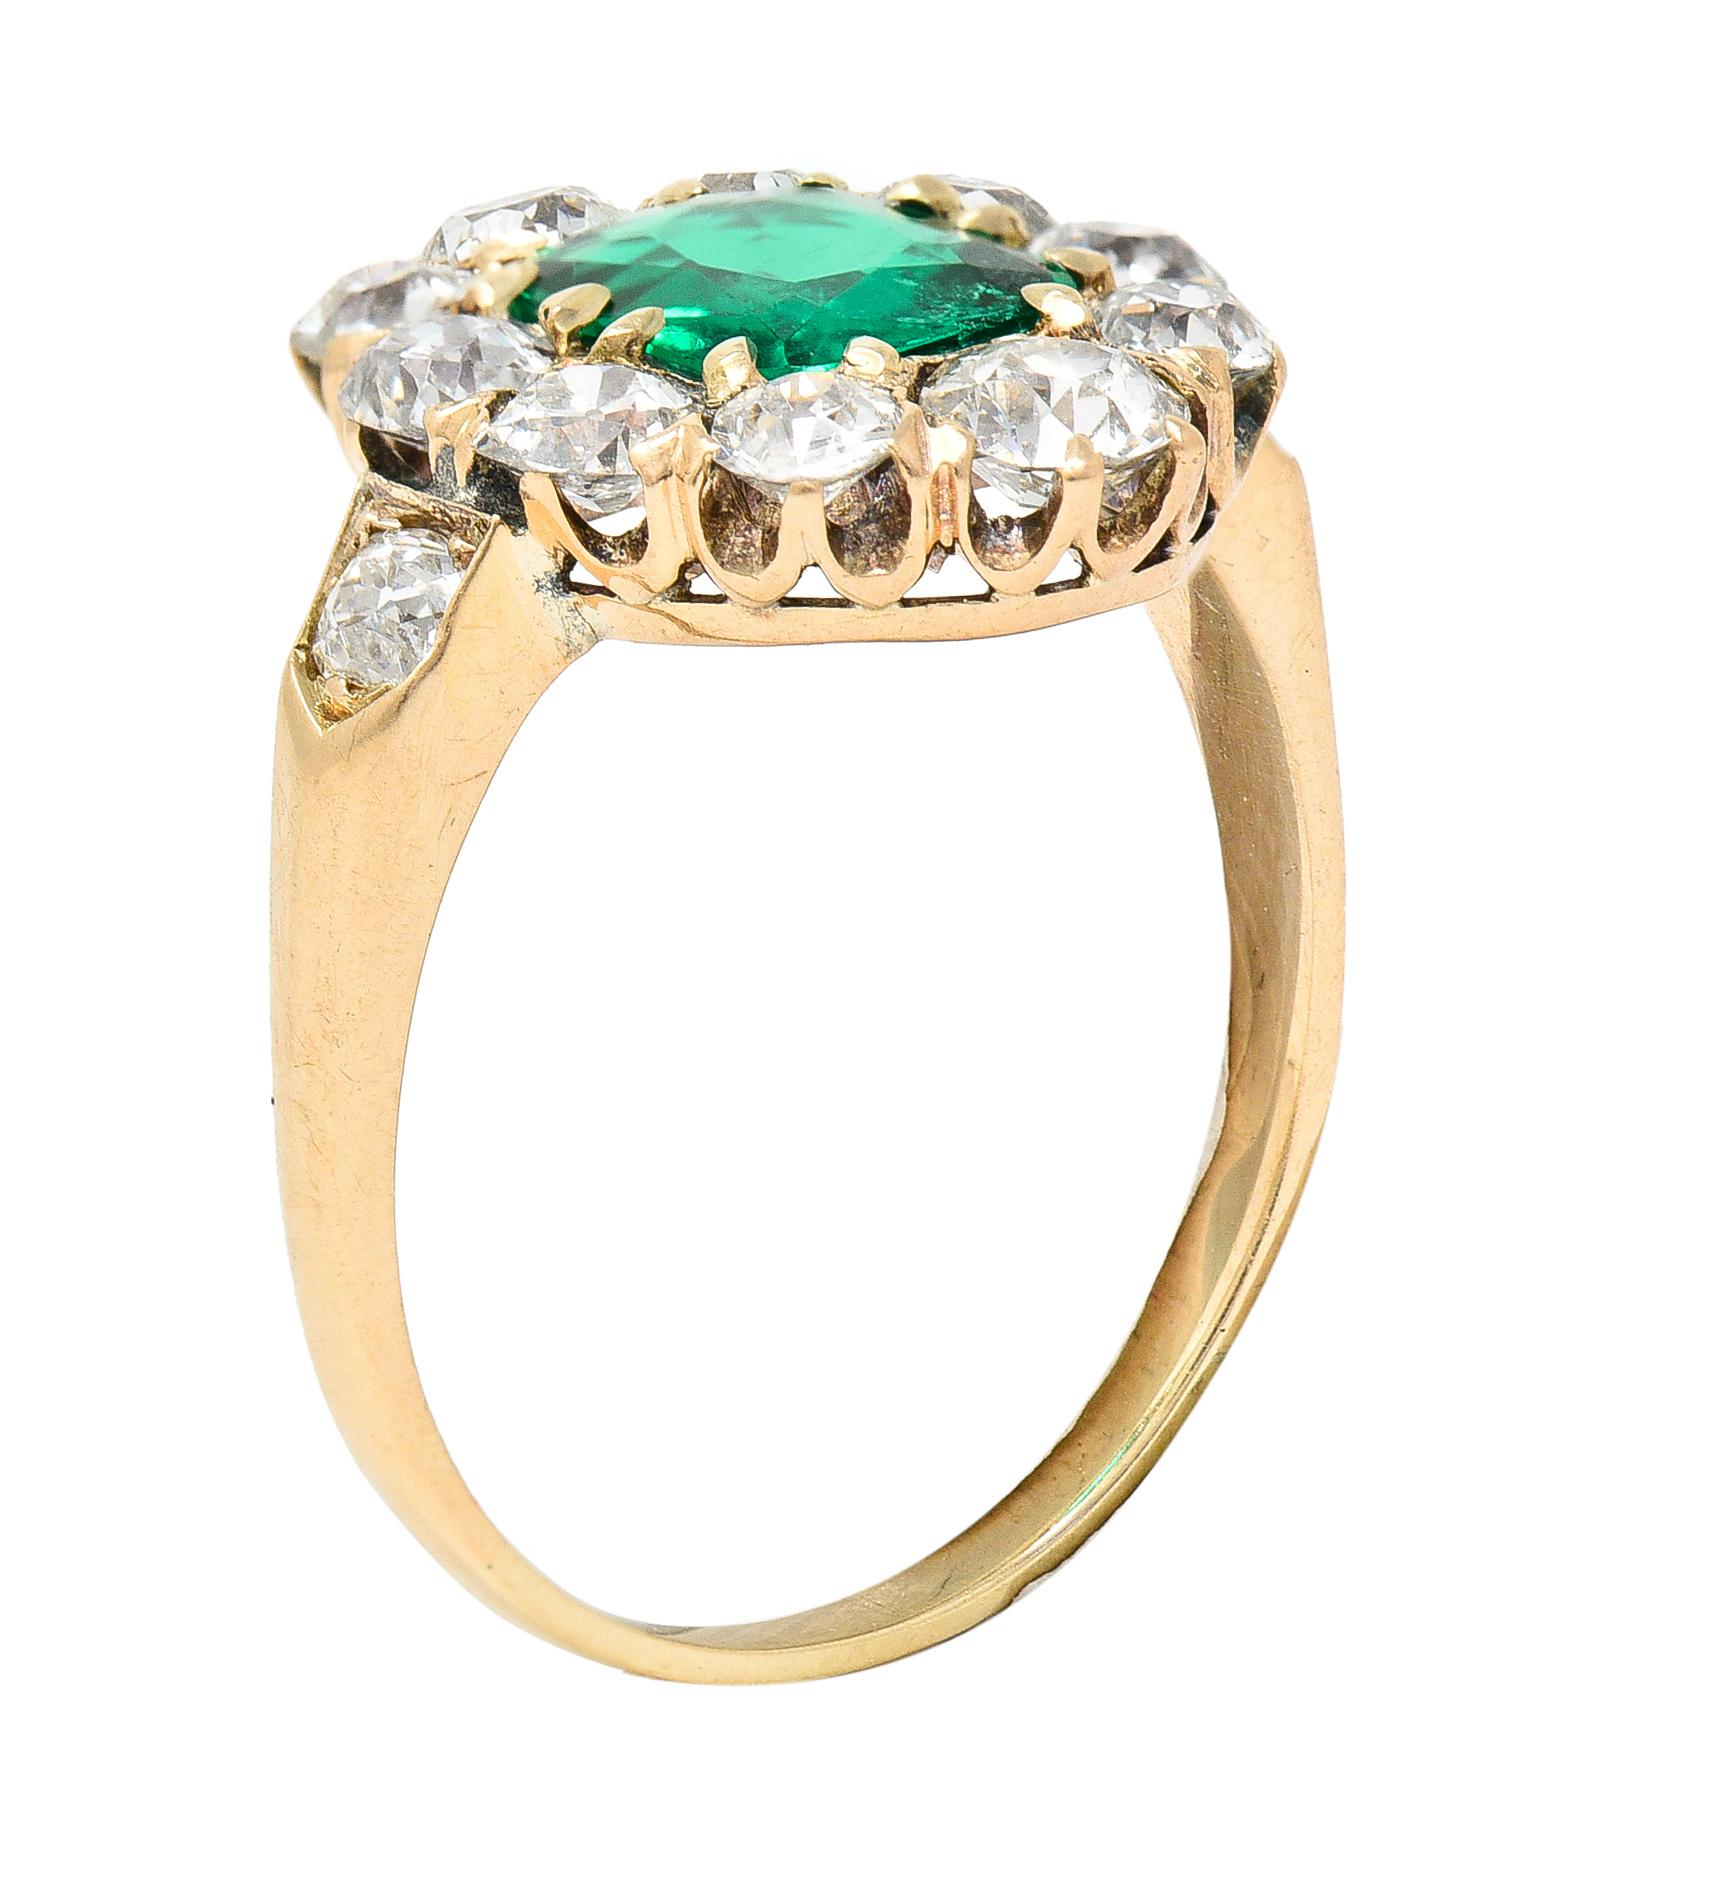 Victorian 2.71 Carat Colombian Cushion Cut Emerald Diamond 14 Karat Gold Ring For Sale 4